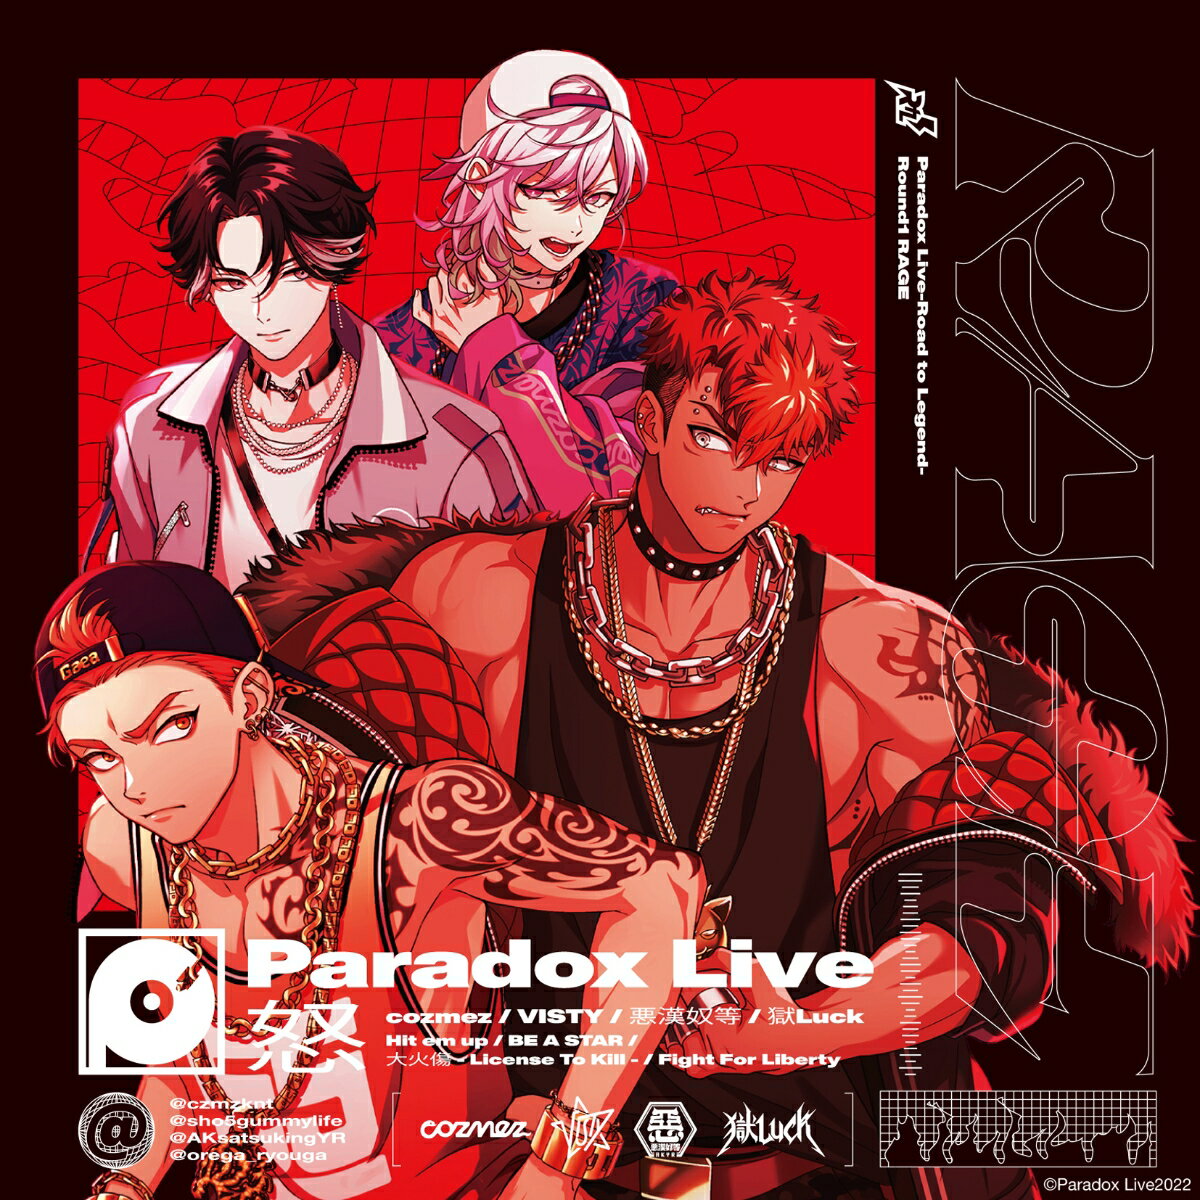 HIPHOPメディアミックスプロジェクト「Paradox Live」パラドックスライブ新たなバトルが始まる！
Paradox Live -Load to Legend- Round1 “FATE” “RAGE ”発売決定！